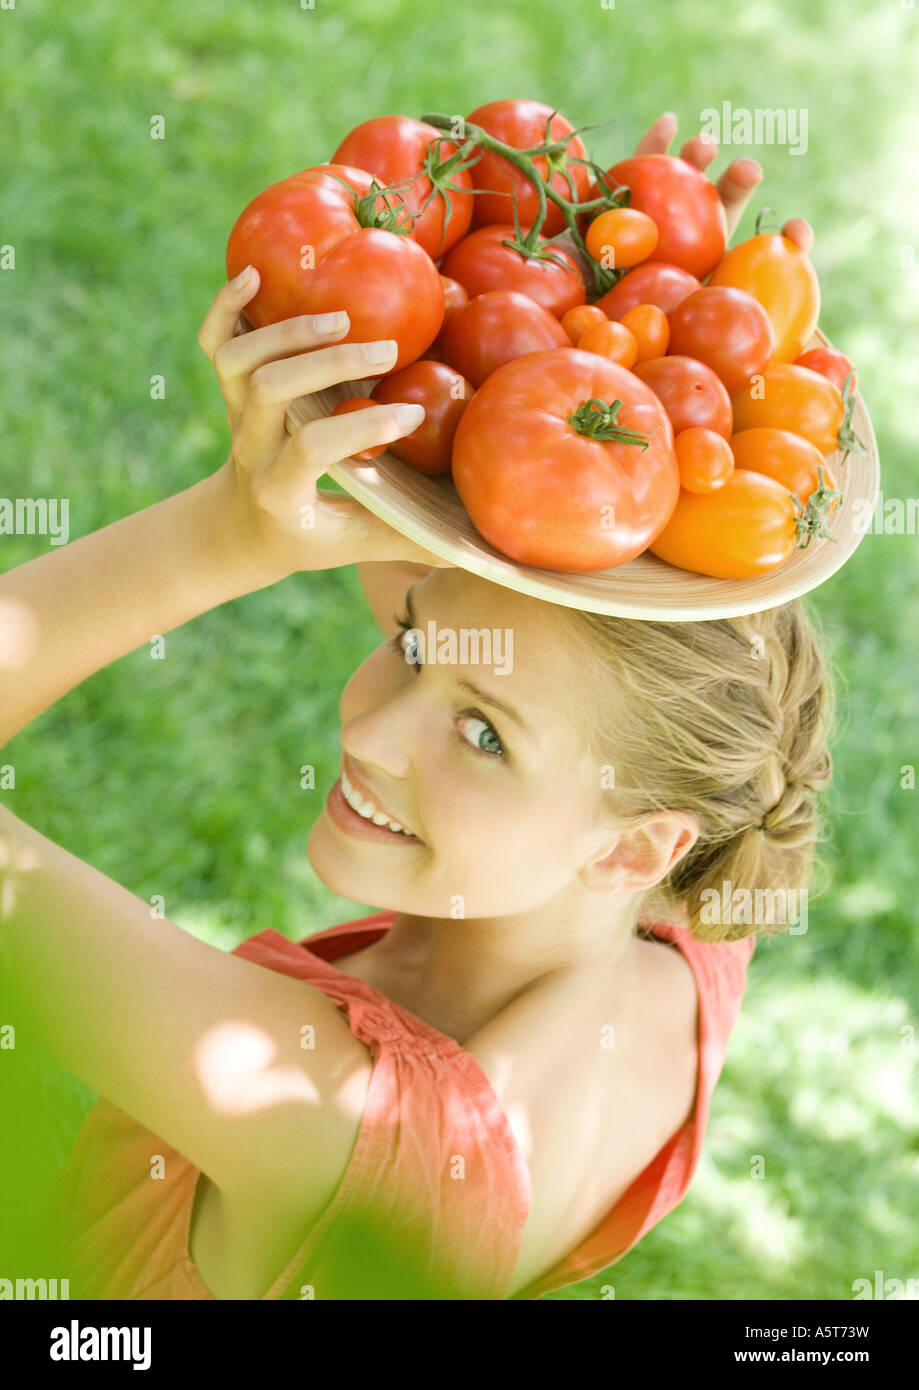 Frau Holding Schüssel voller Tomaten oben auf Kopf Stockfoto